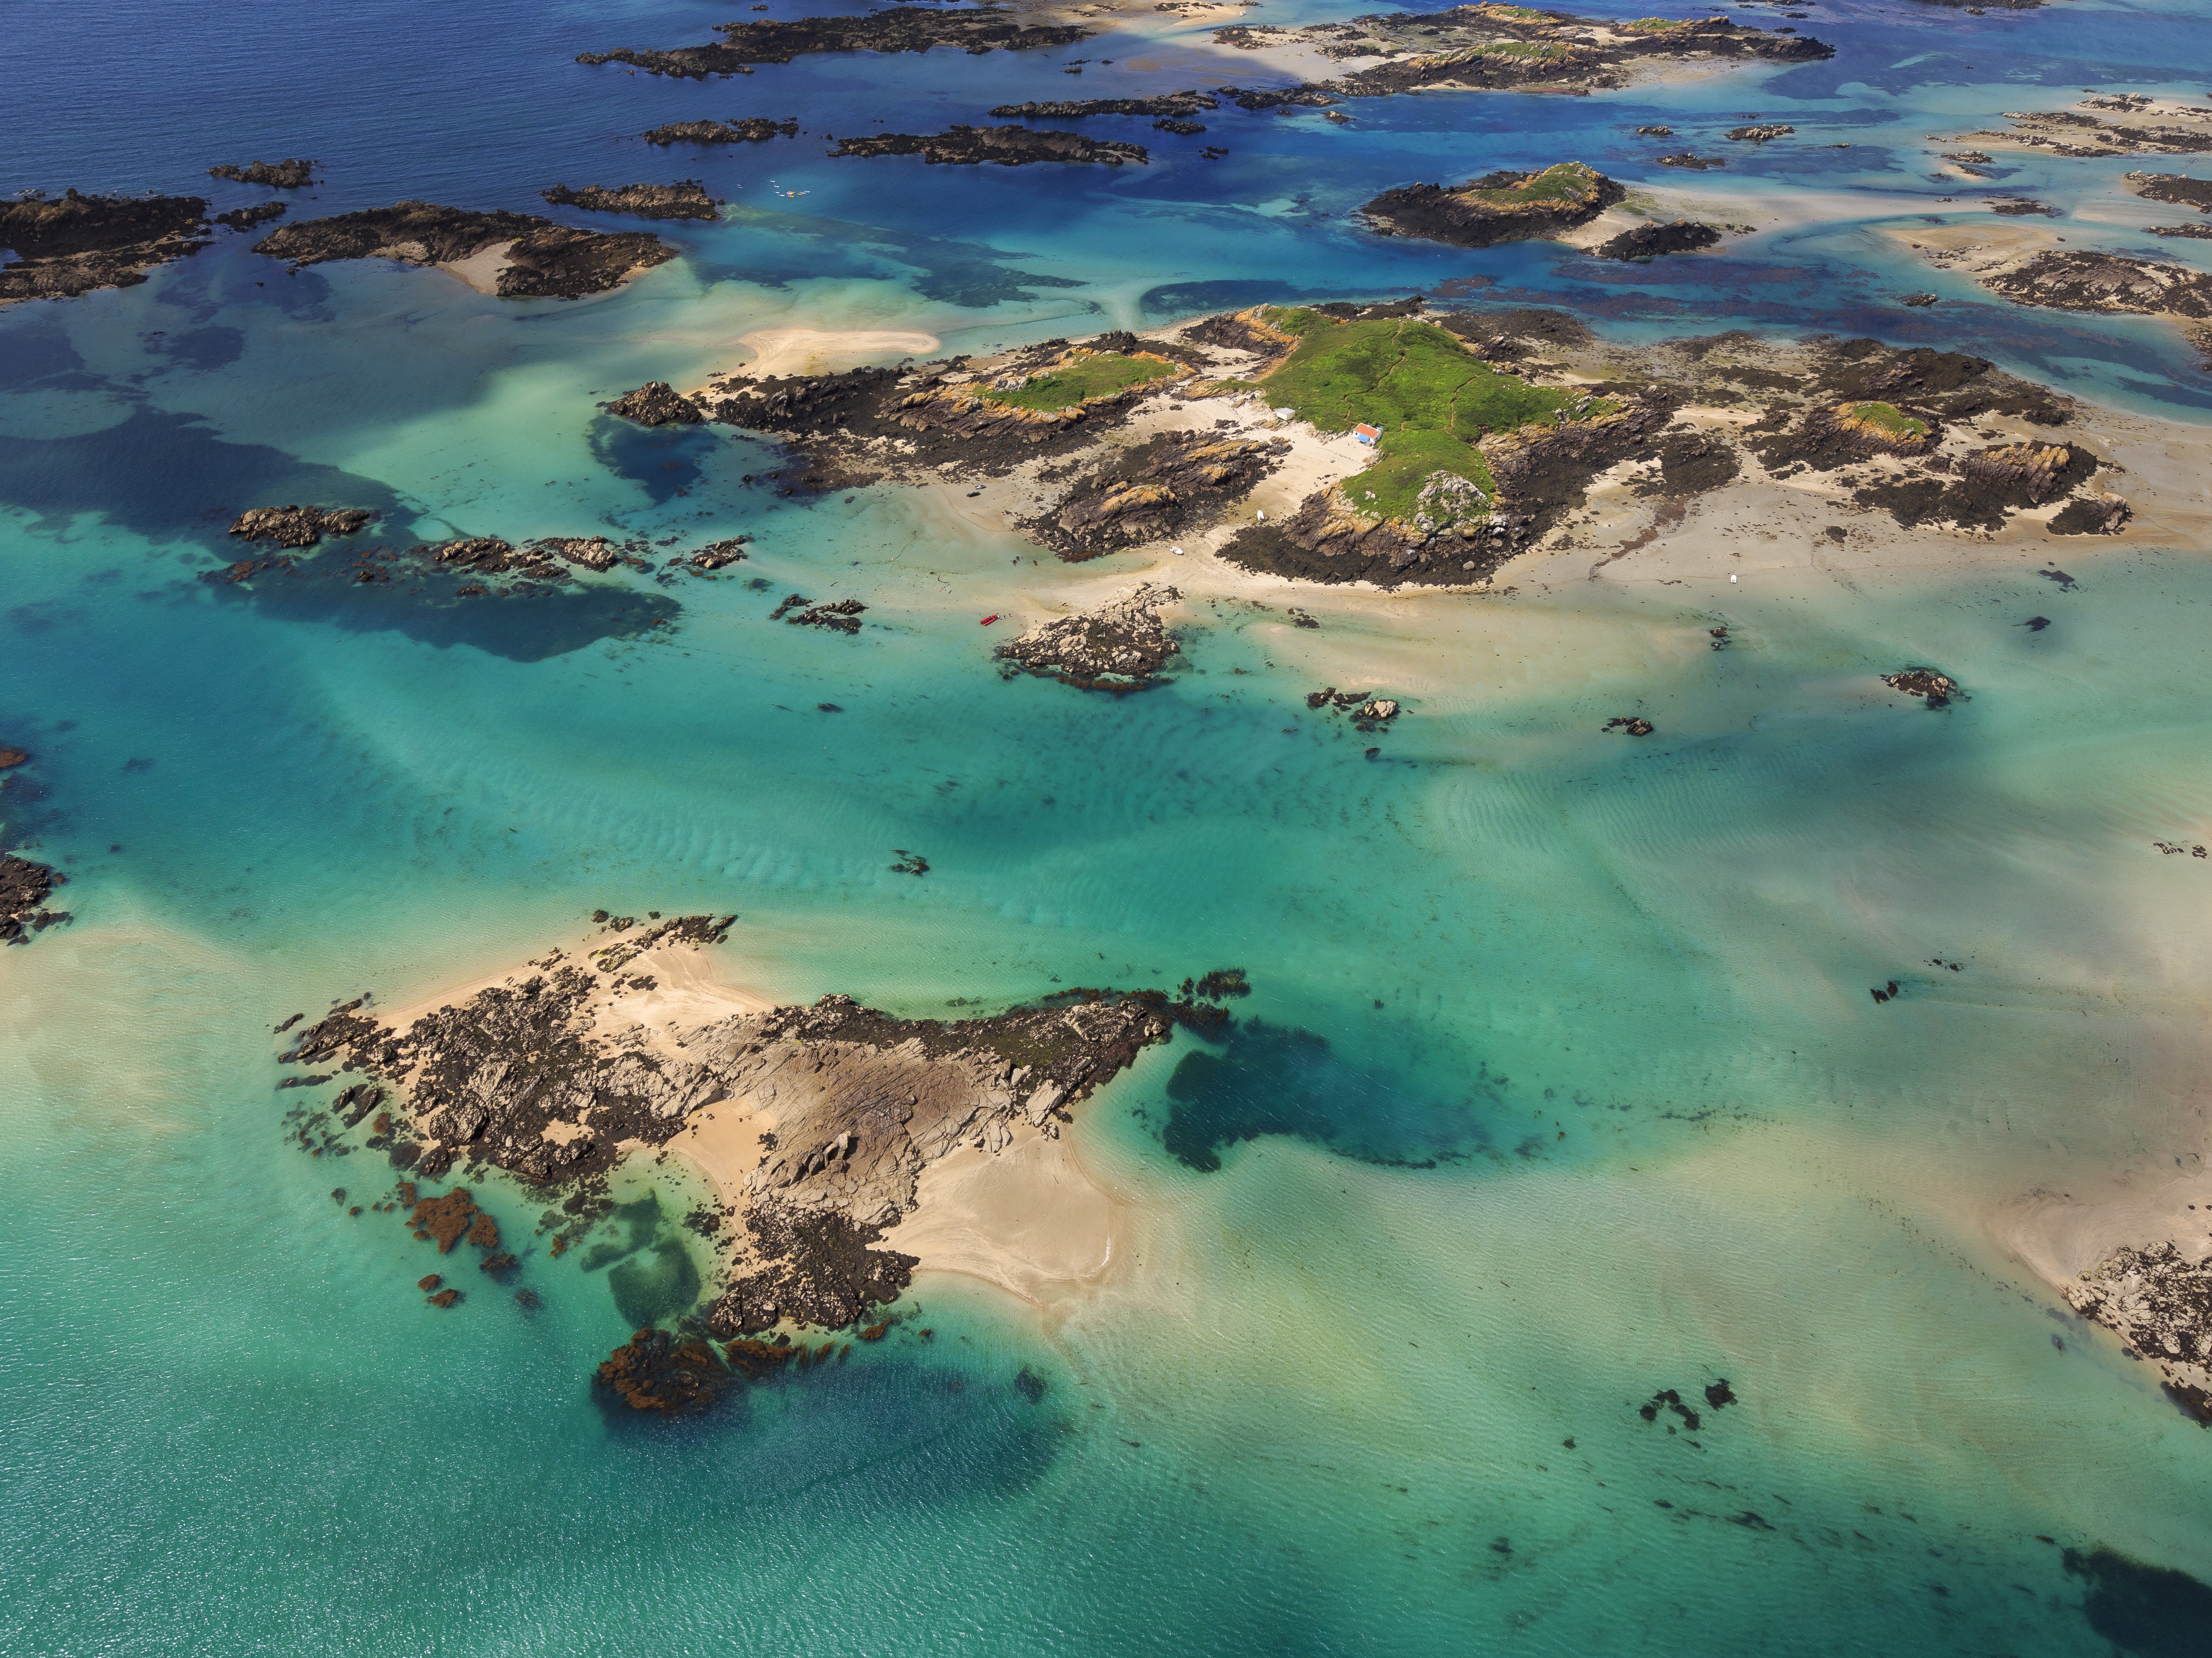 Island paradise: the remote Chausey archipelago off the coast of La Manche